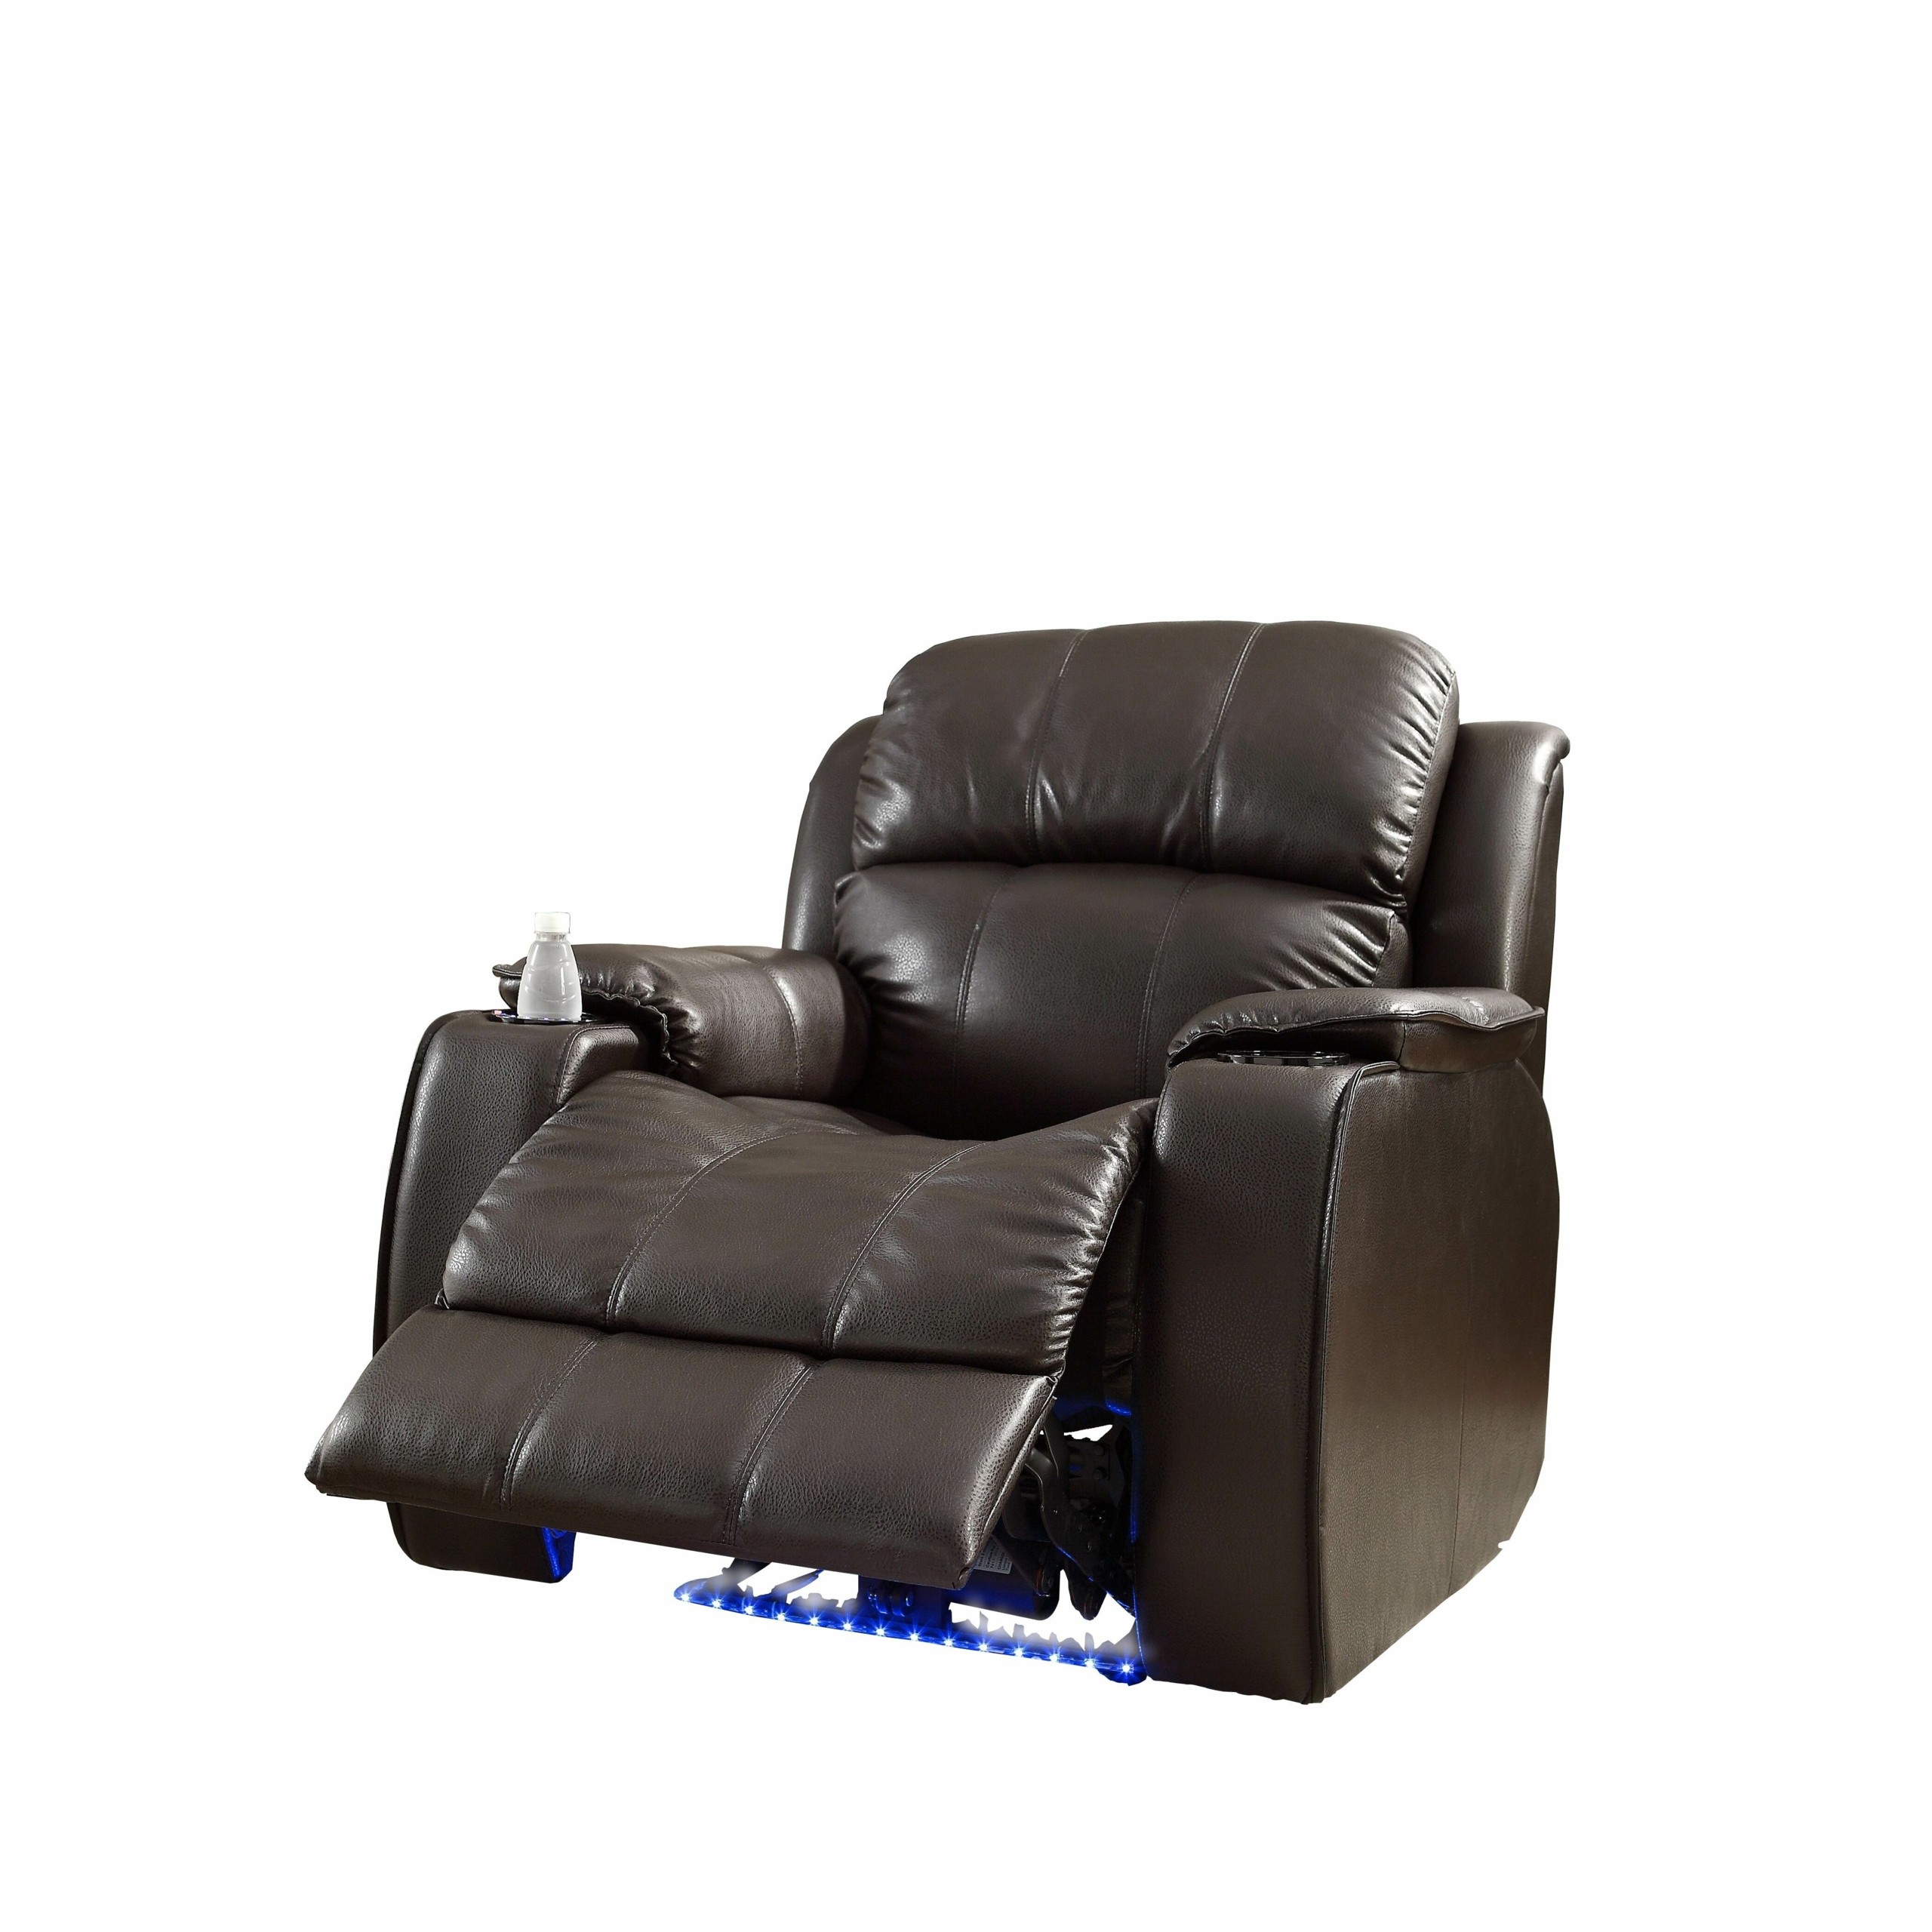 Garrett power recliner brown bonded leather chair